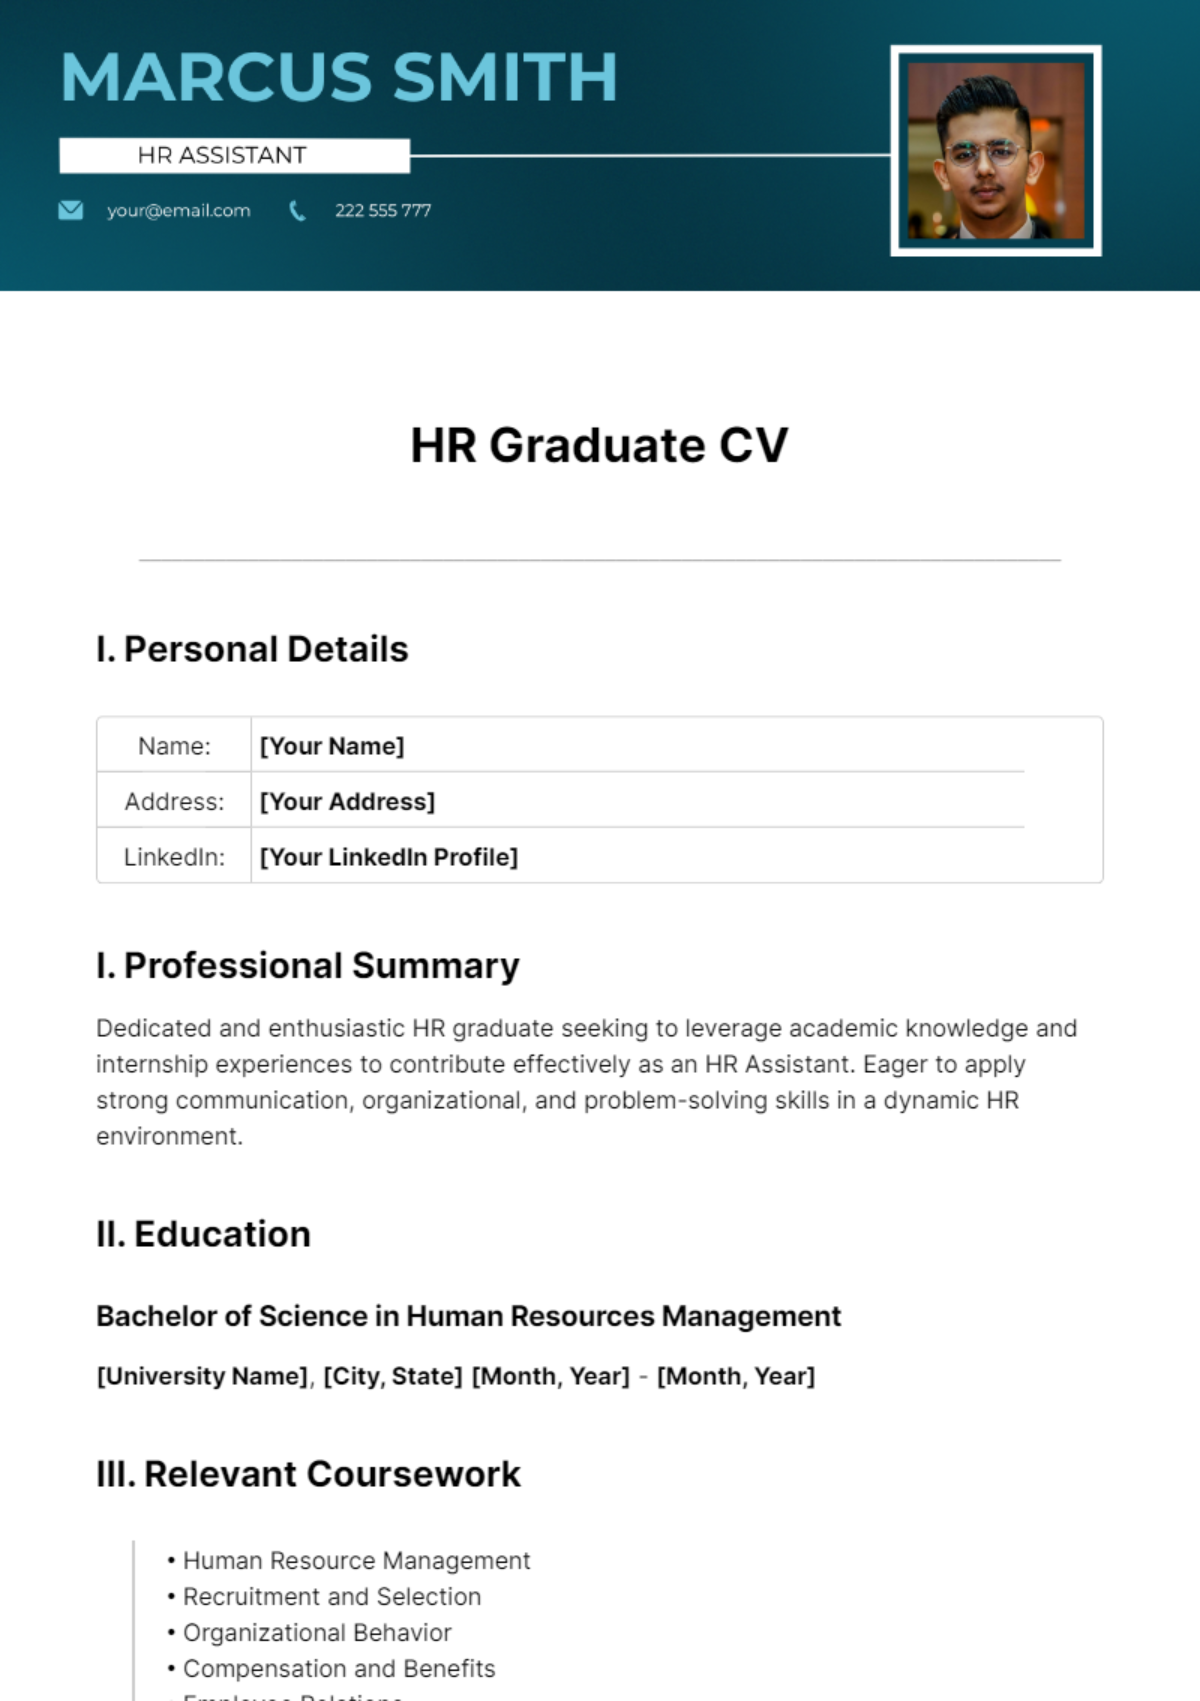 HR Graduate CV Template